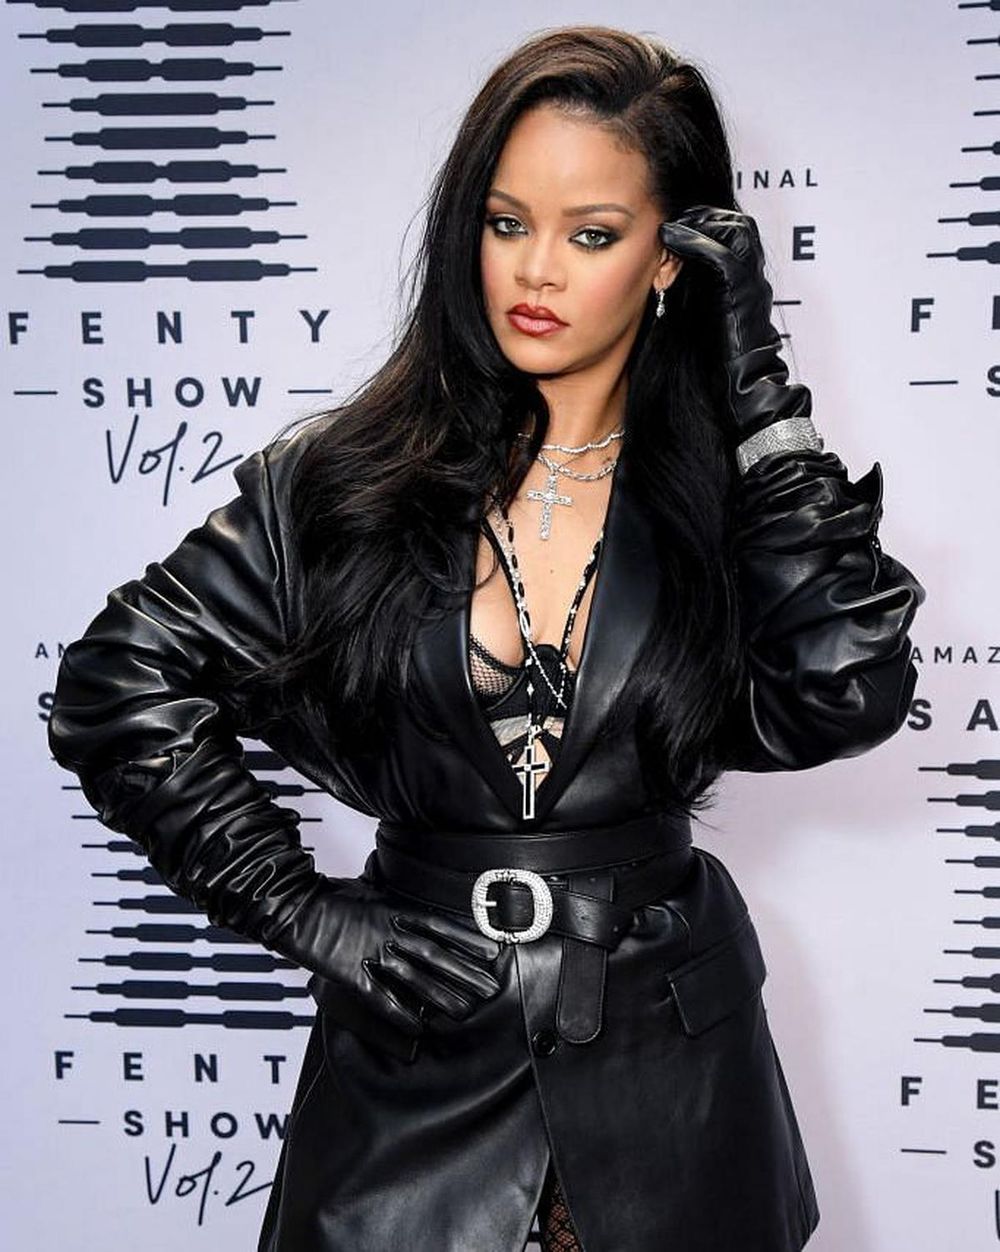 4 Key Points On Why Fenty, Rihanna and LVMH's Fashion Brand